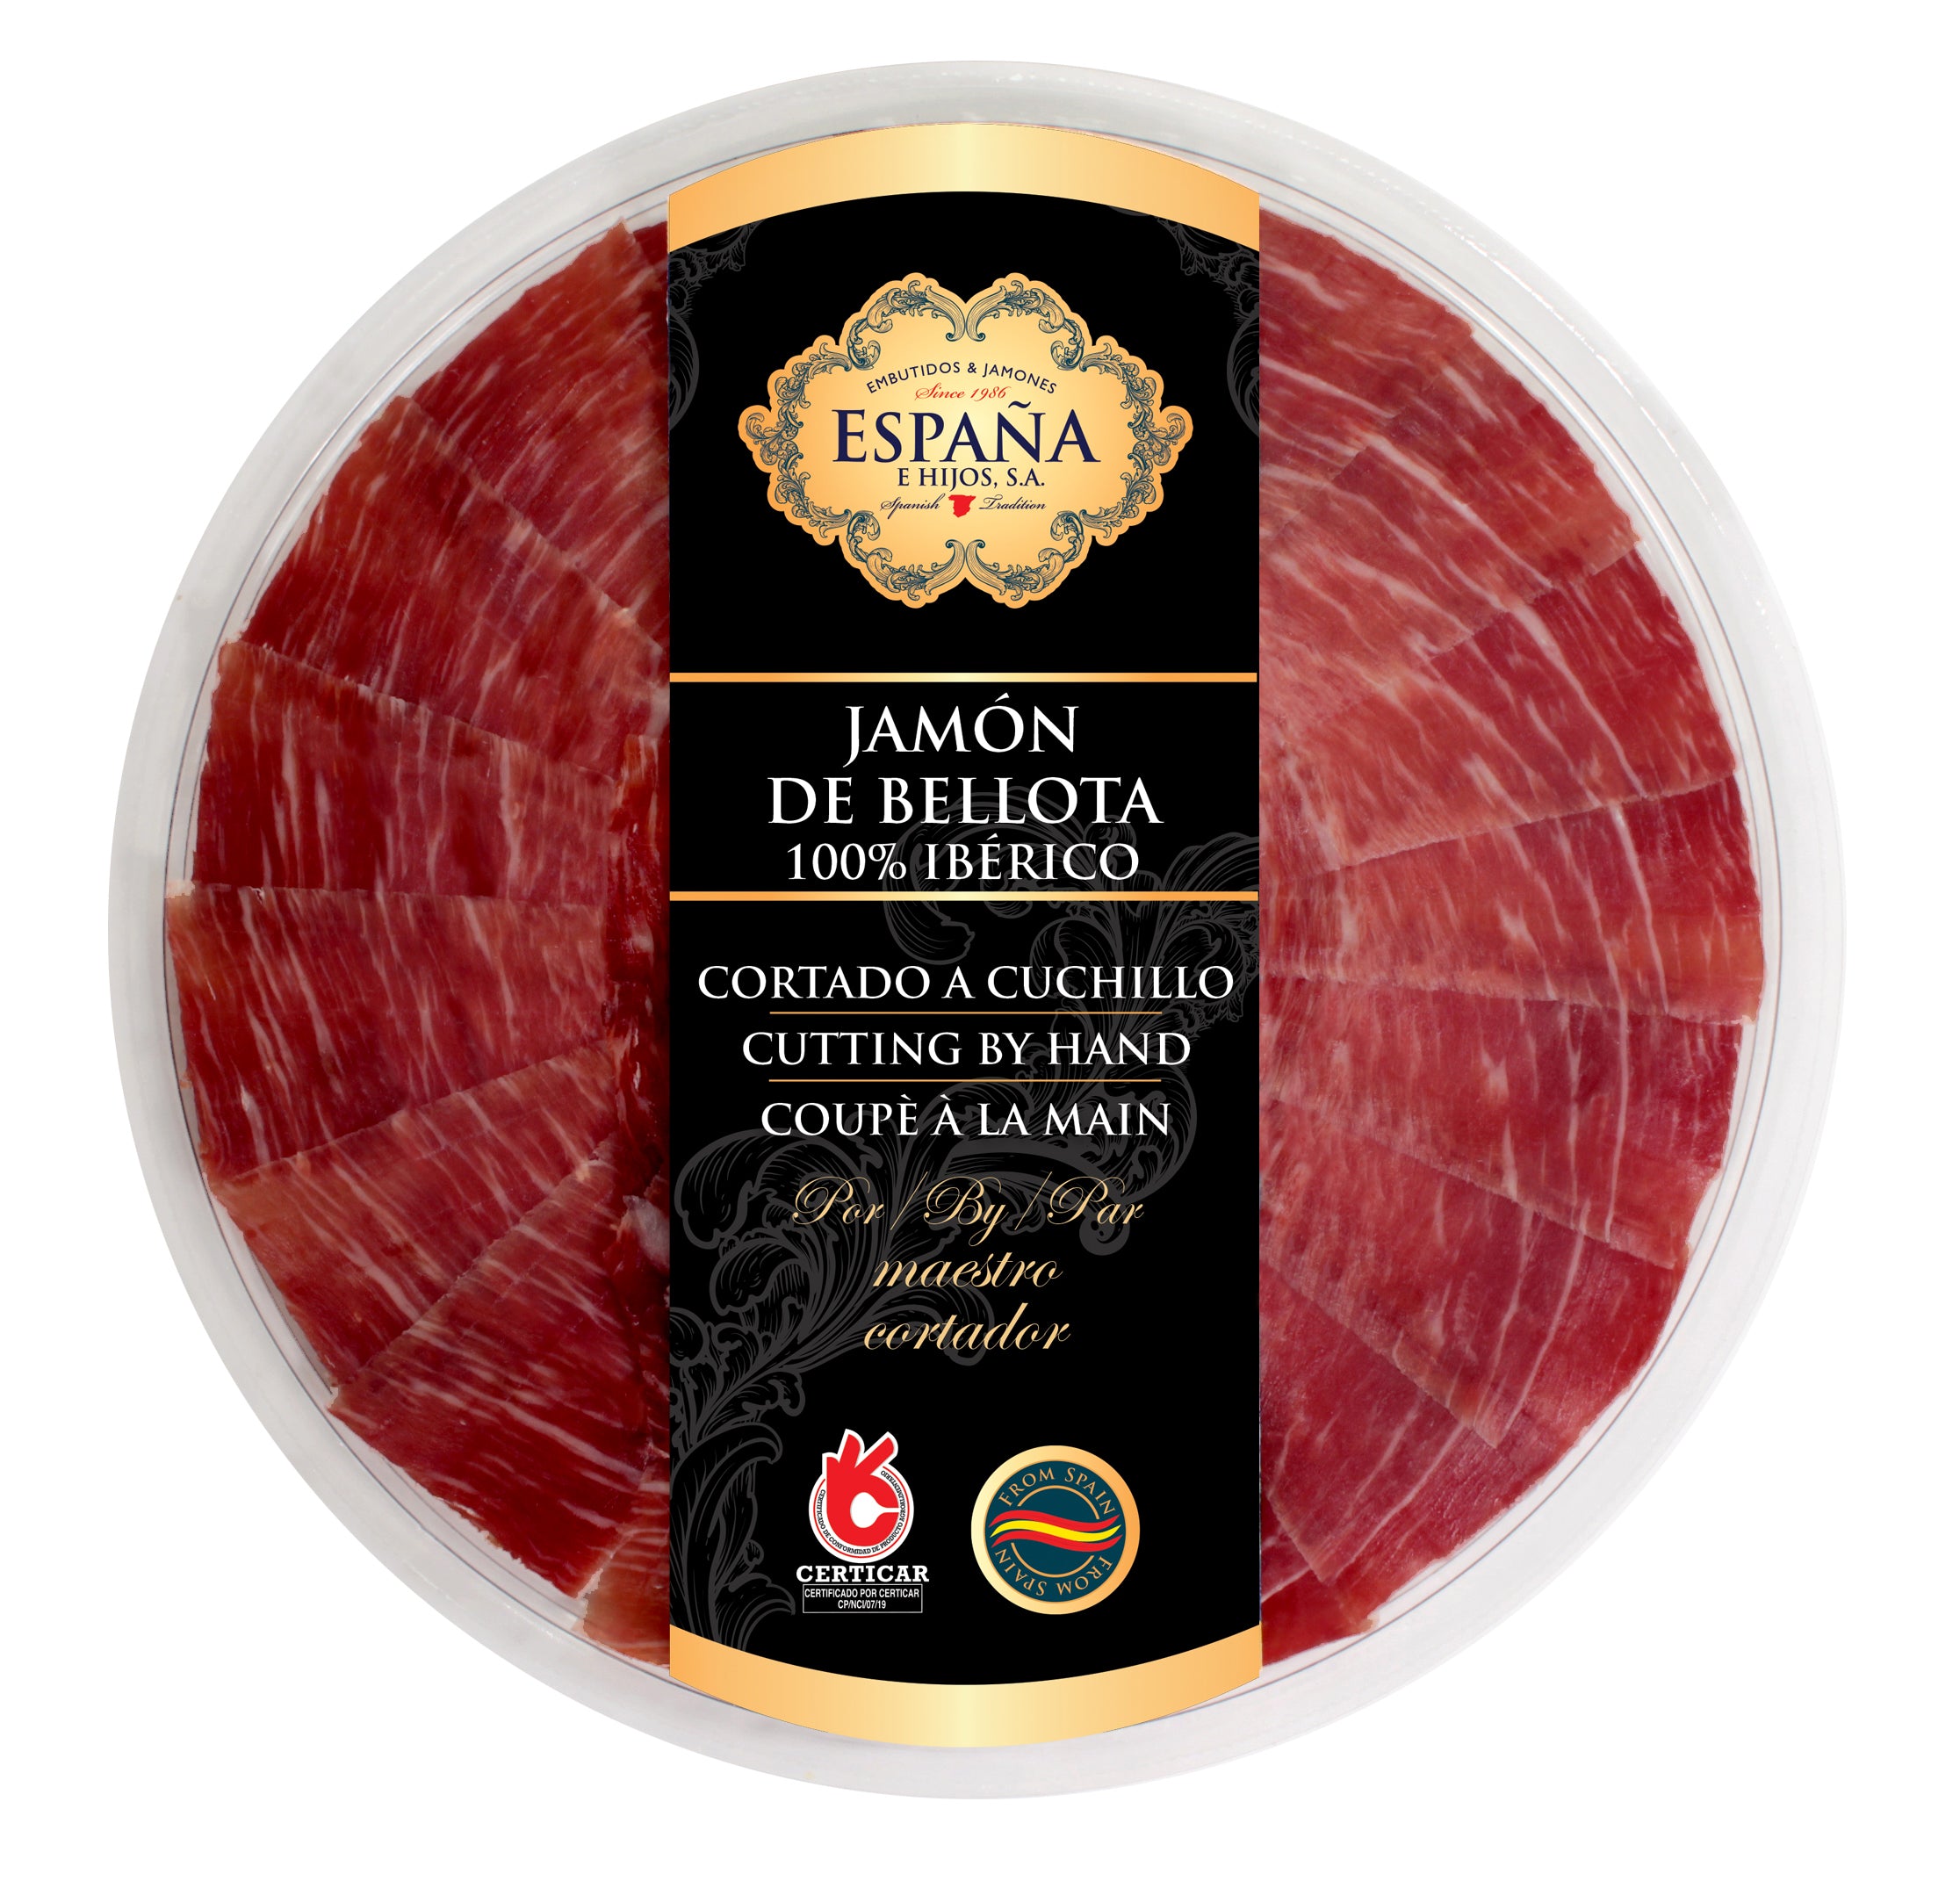 Plate of 100% Iberian Acorn-fed Ham Cut with a Knife